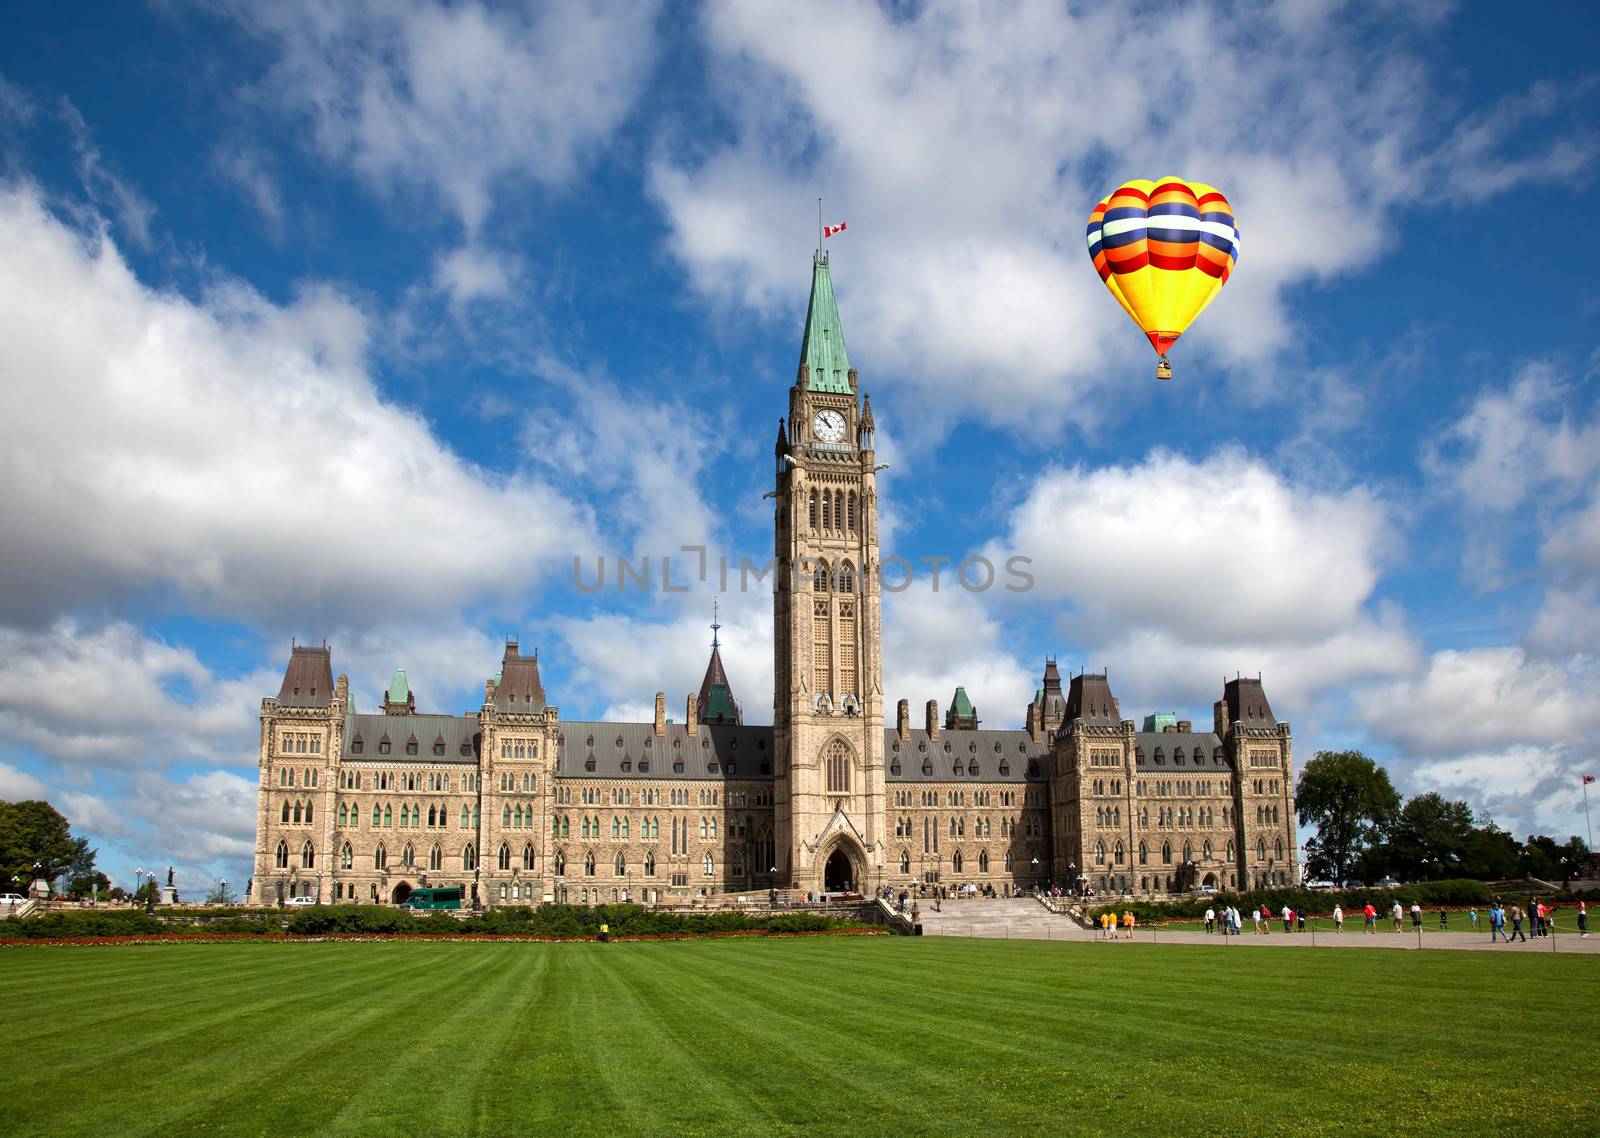 Parliament Buildings in Ottawa, Canada by gary718